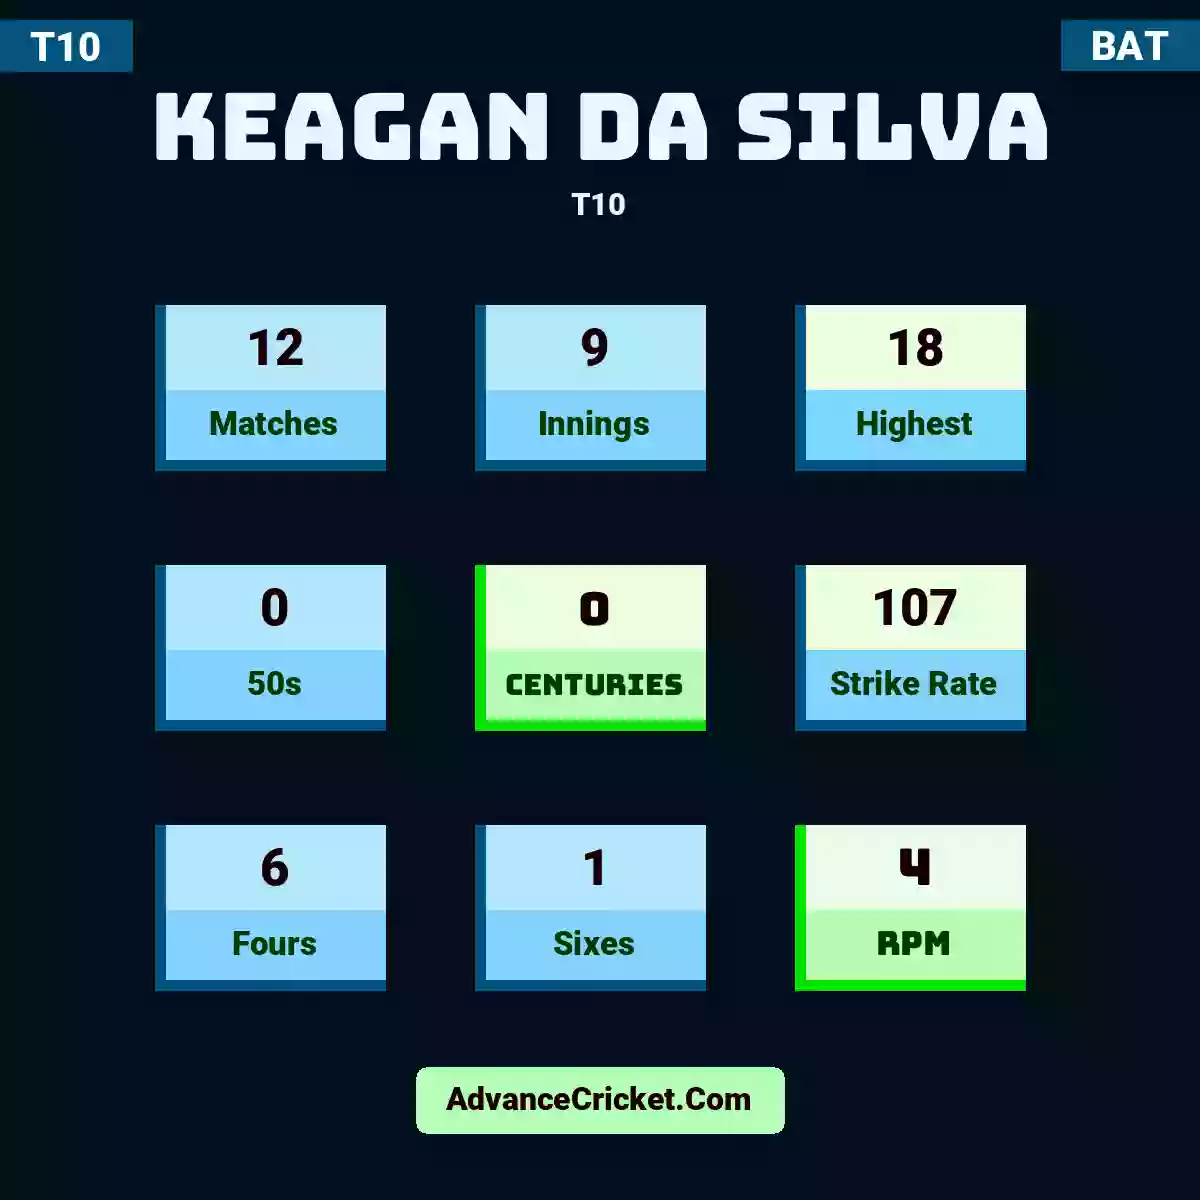 Keagan Da Silva T10 , Keagan Da Silva played 12 matches, scored 18 runs as highest, 0 half-centuries, and 0 centuries, with a strike rate of 107. K.Da.Silva hit 6 fours and 1 sixes, with an RPM of 4.